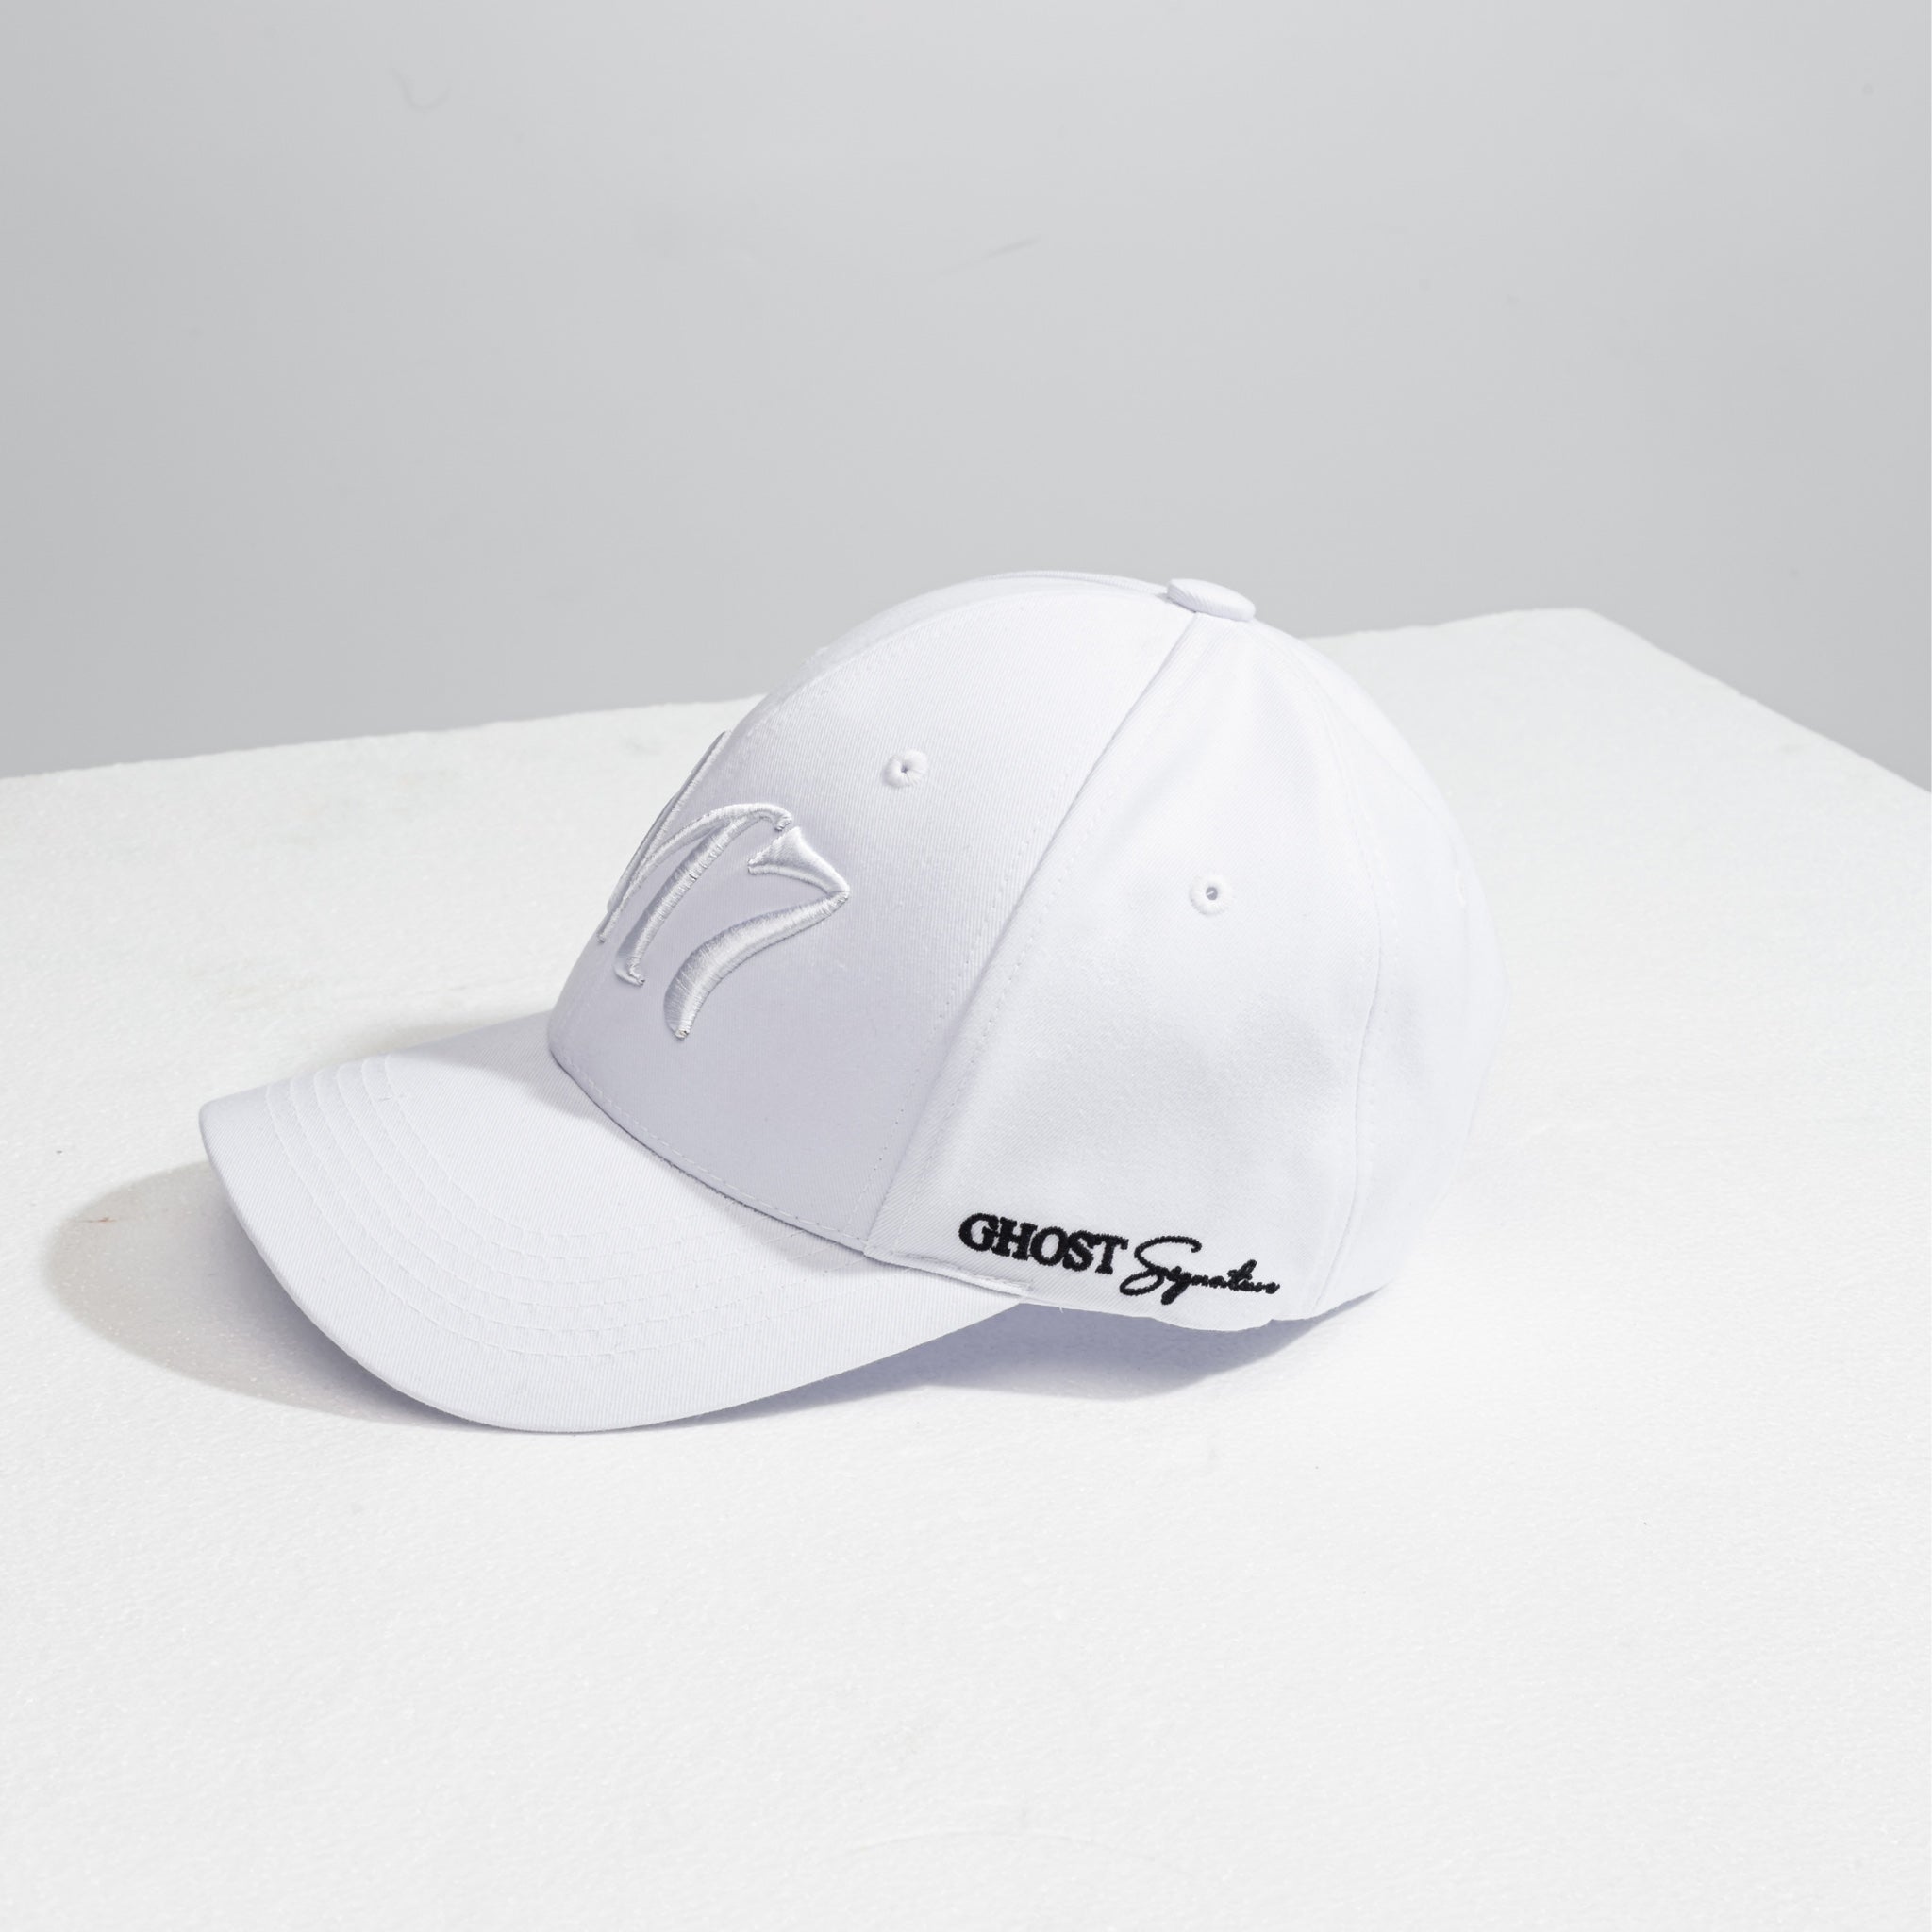 Personalized White Cap | M7 Signature Cap | Mystic Se7en